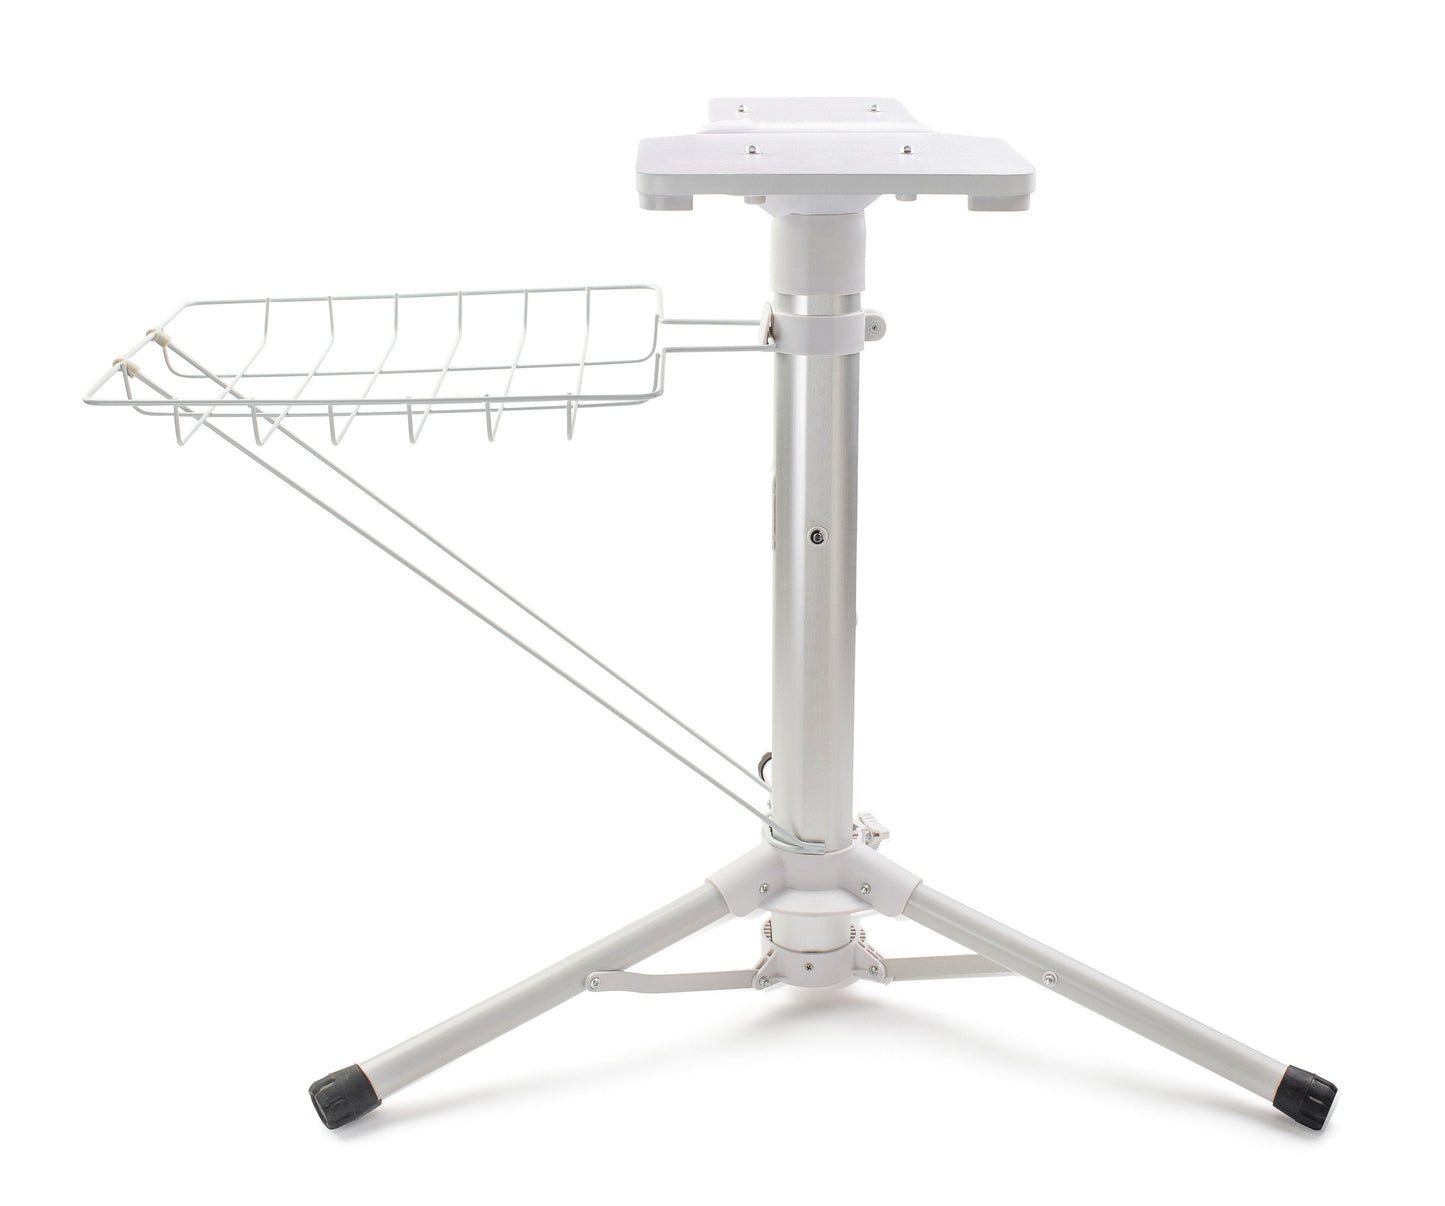 Mega 64cm Ironing Press - Steam and Dry Press (white) - Singer Outlet Offer